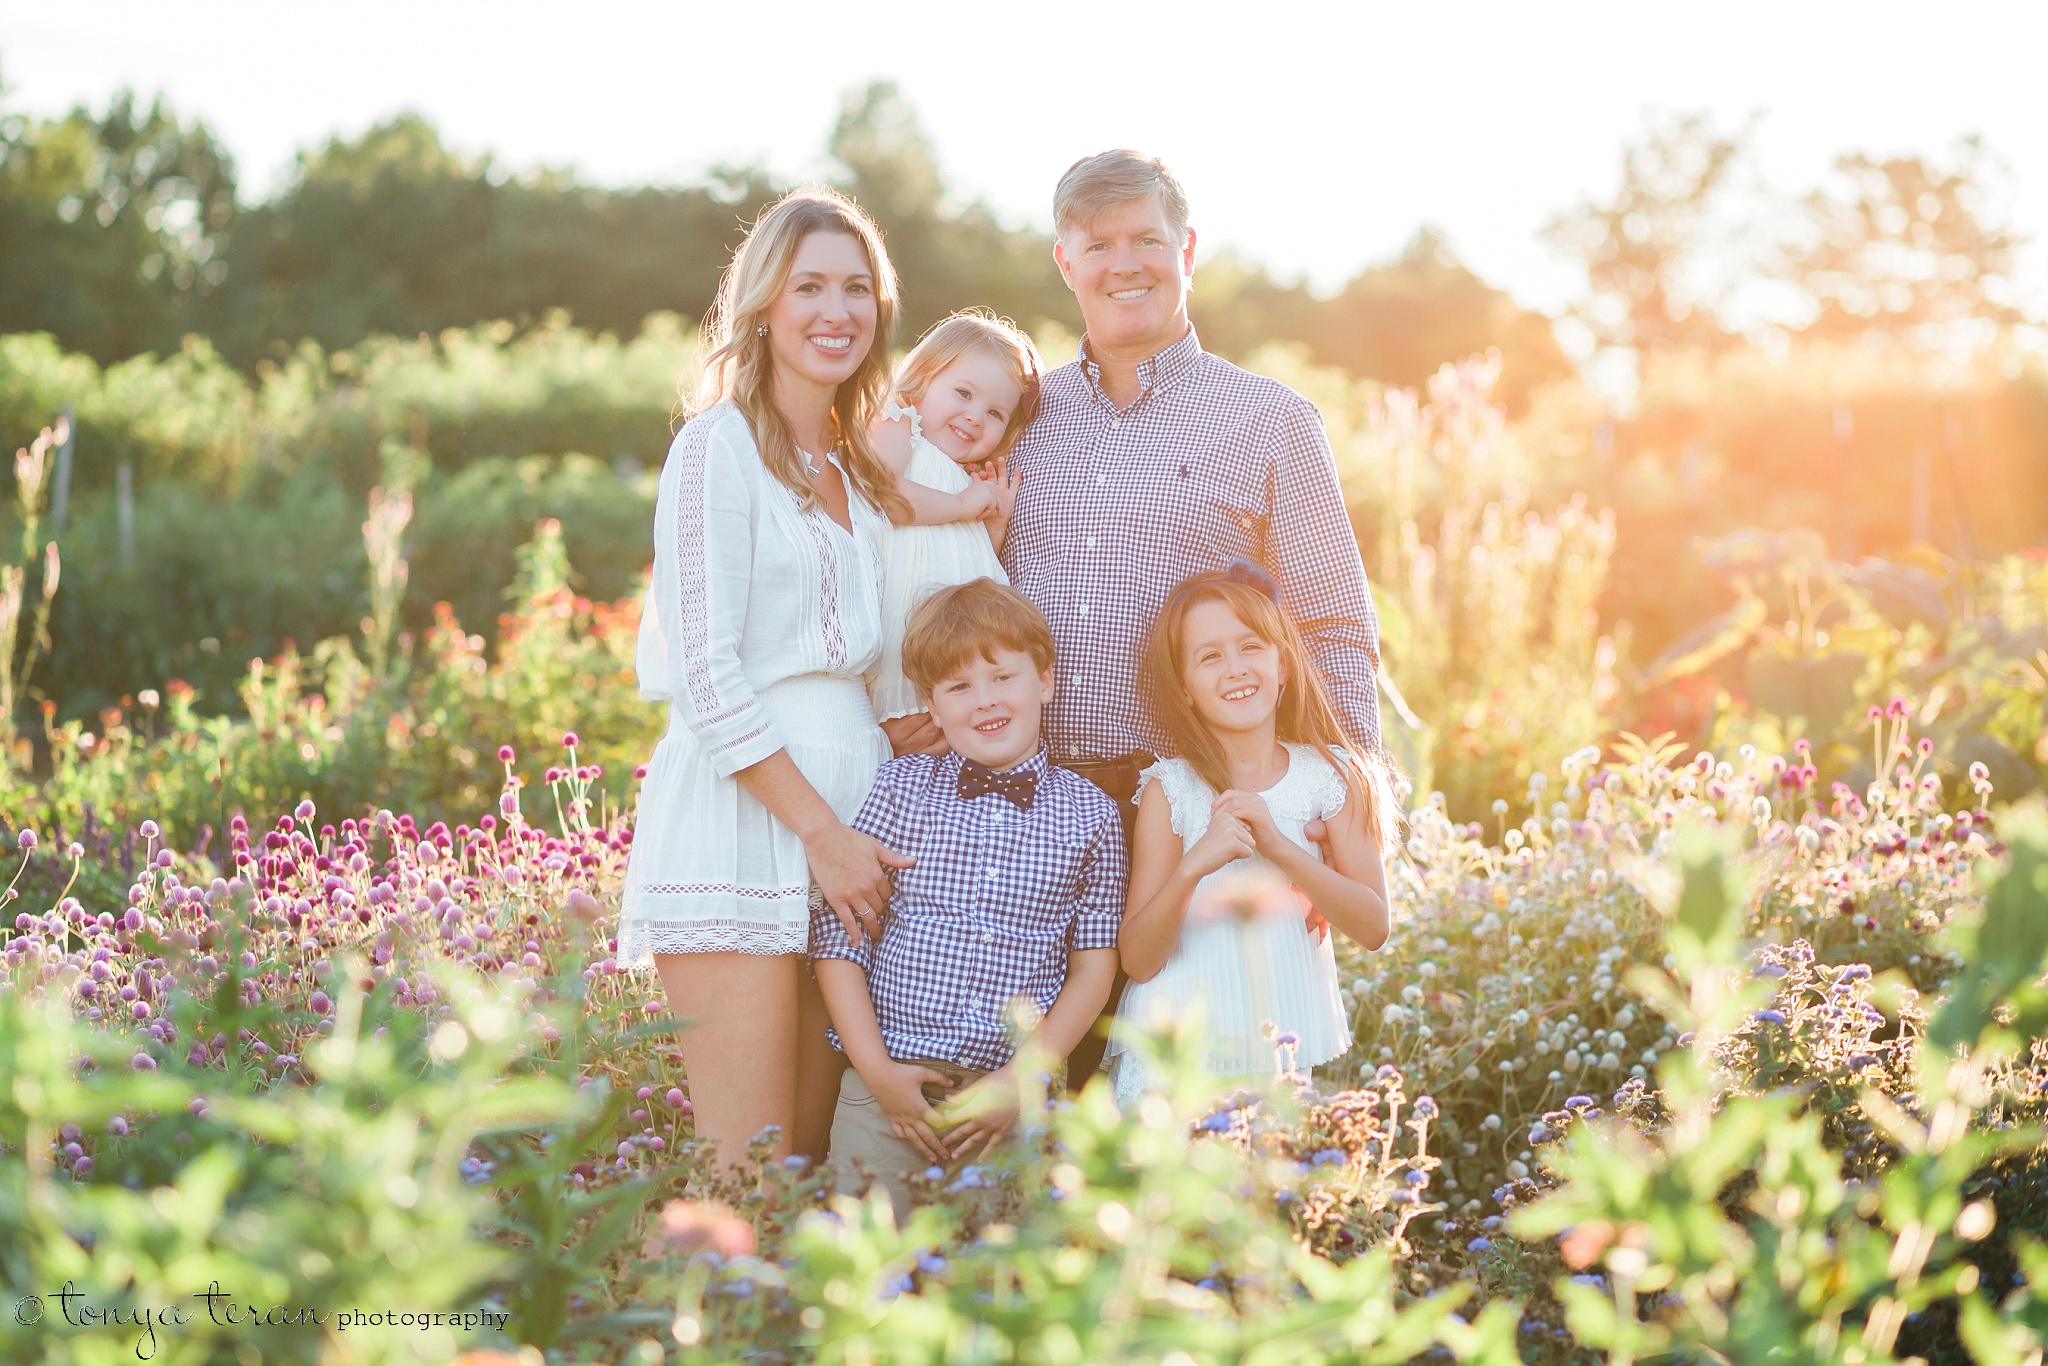 Outdoor Fall Family Photo Session | Tonya Teran Photography, Bethesda, MD Newborn, Baby, and Family Photographer